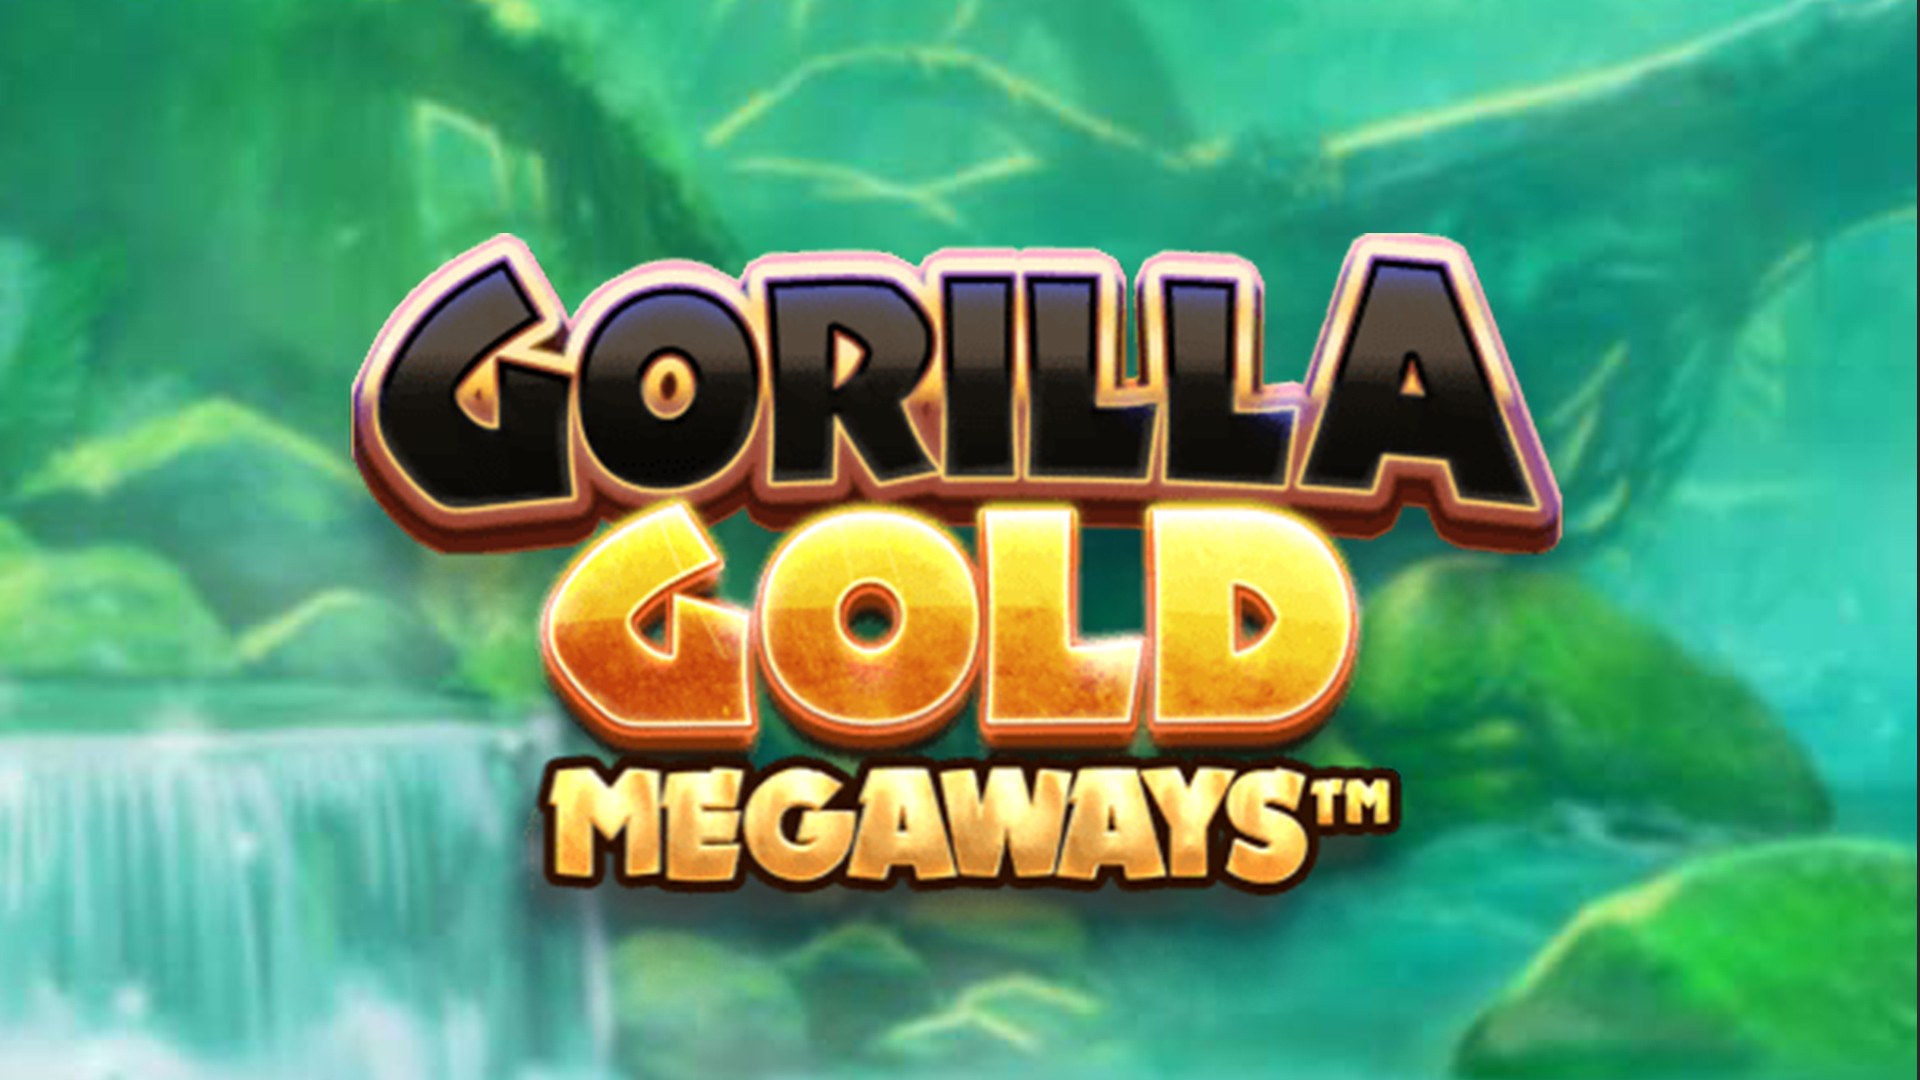 Gorilla Gold MEGAWAYS